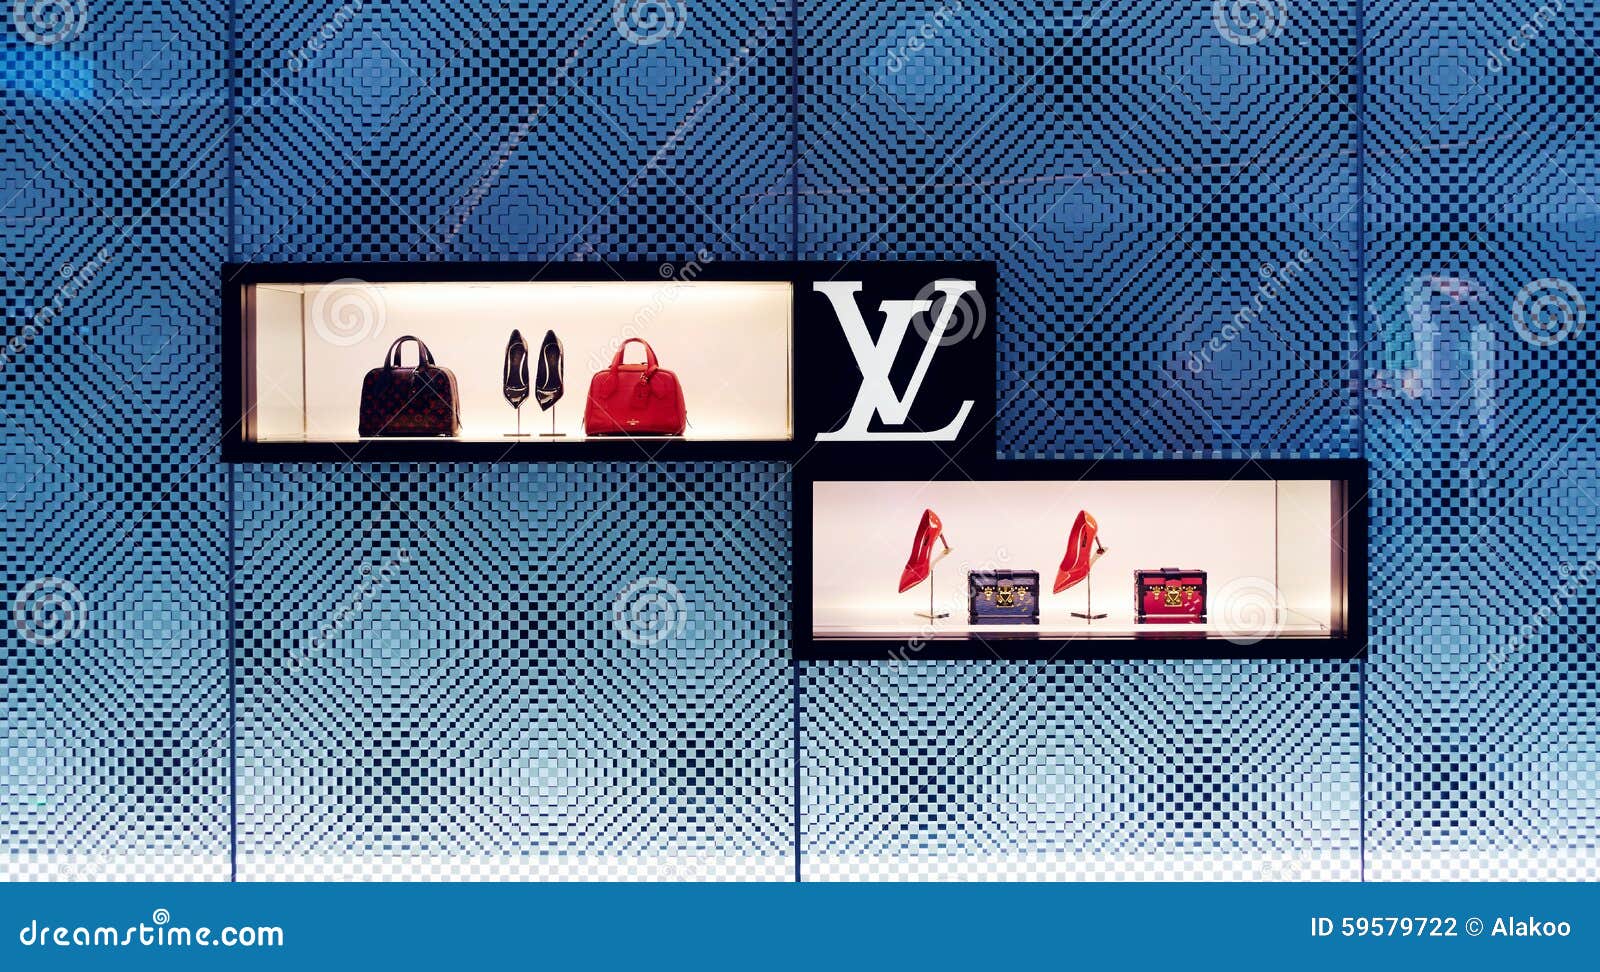 Louis Vuitton Bag Store Shop Window Editorial Photography - Image: 59579722